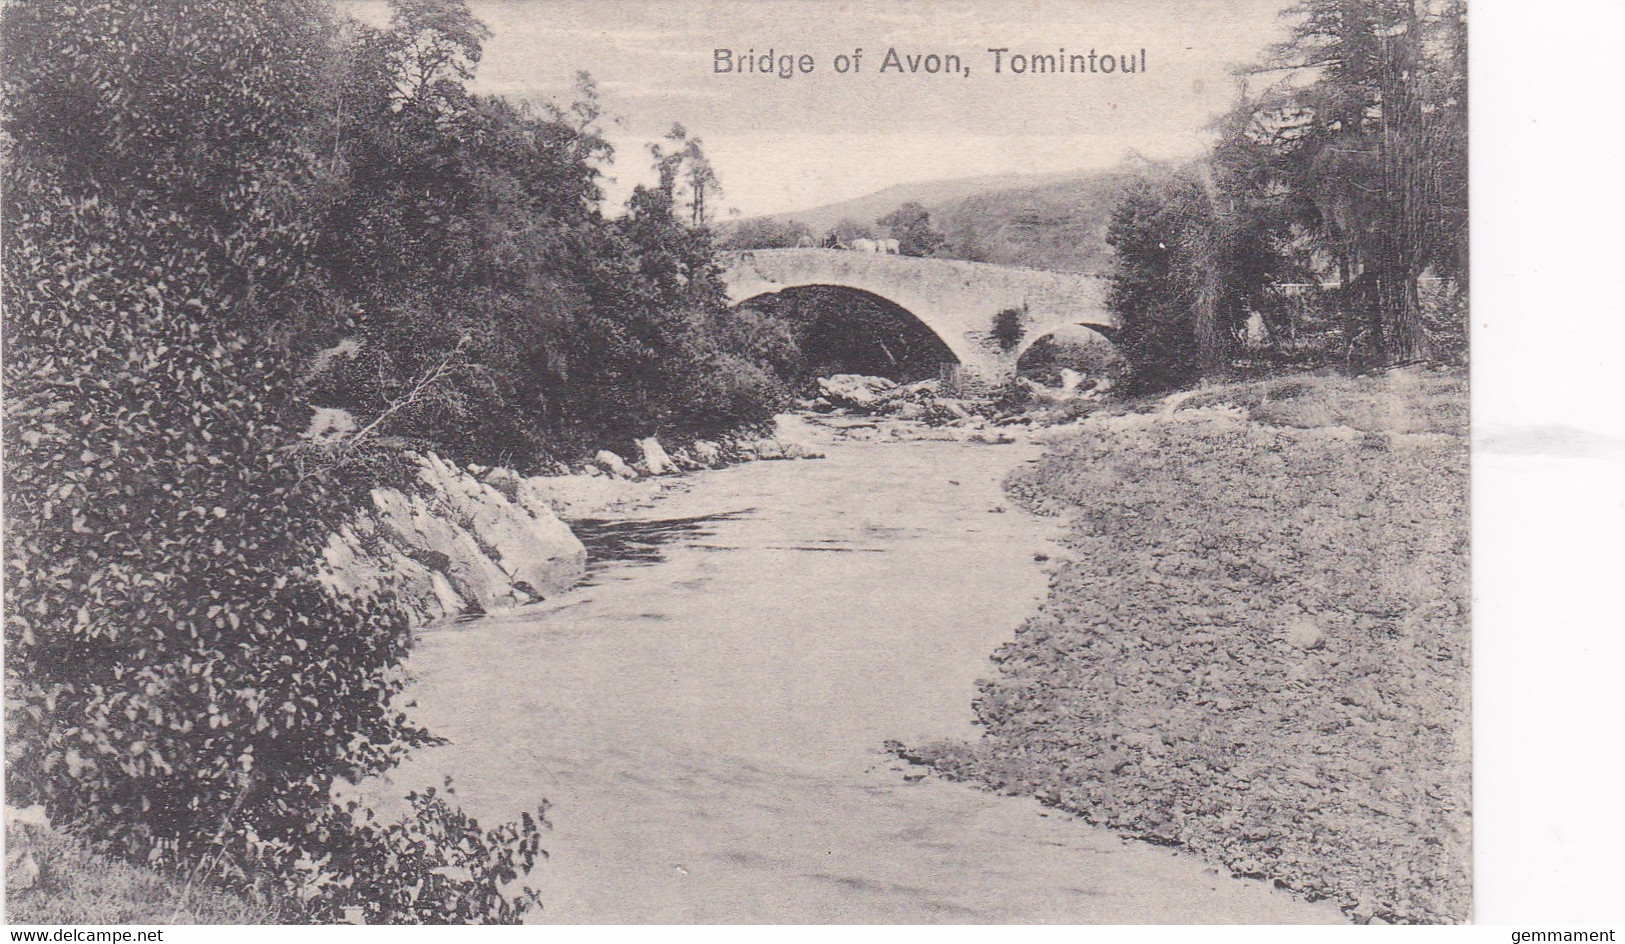 TOMINTOUL - BRIDGE OF AVON - Moray